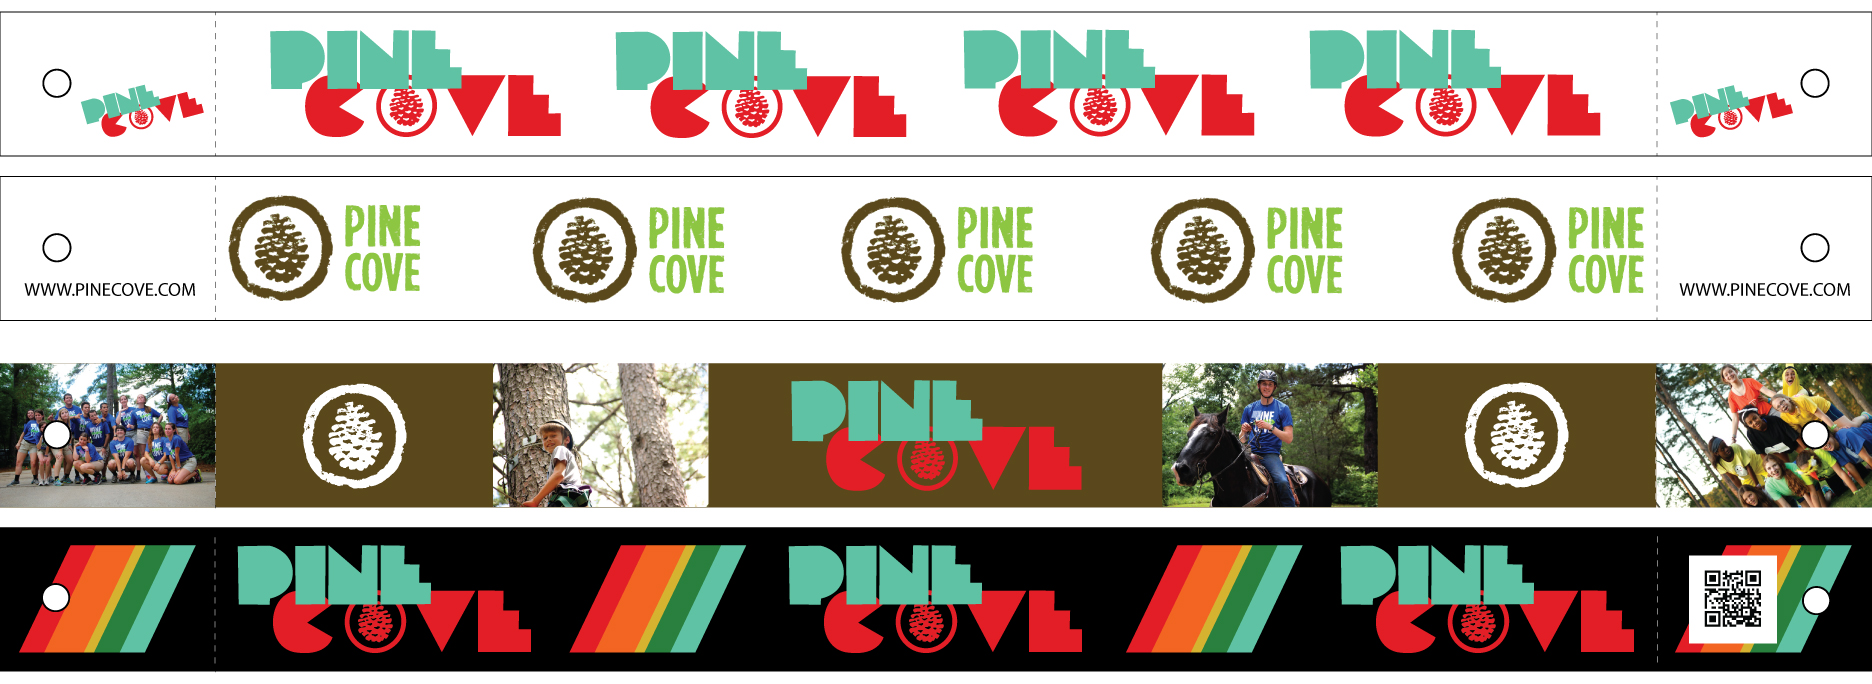 Pine Cove Virtual